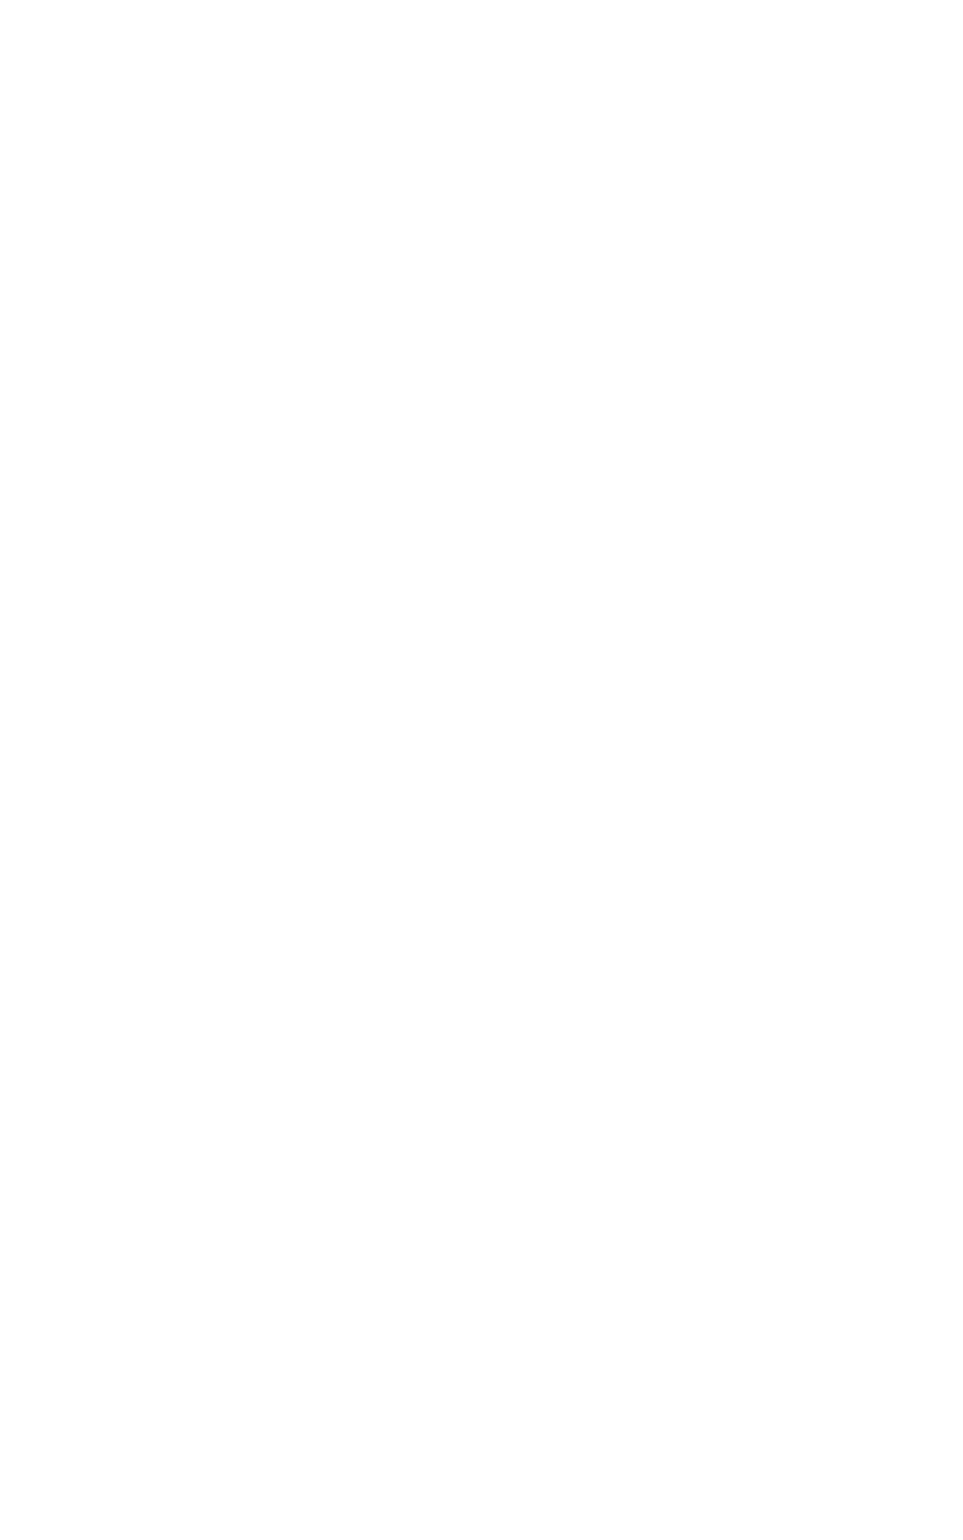 Fluence Energy logo for dark backgrounds (transparent PNG)